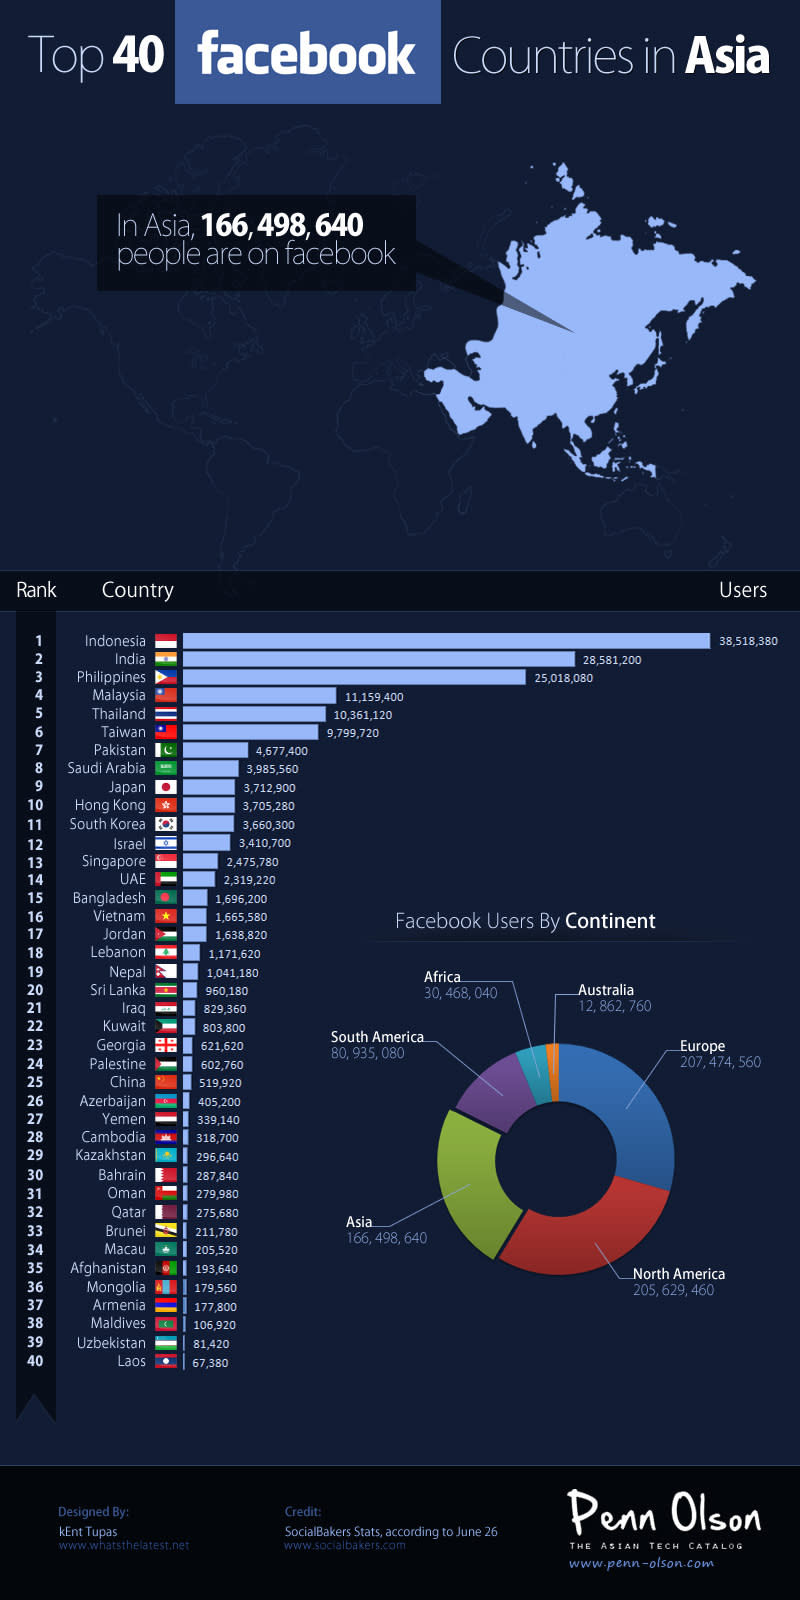 Top 40 Facebook Countries in Asia (Penn-Olson)